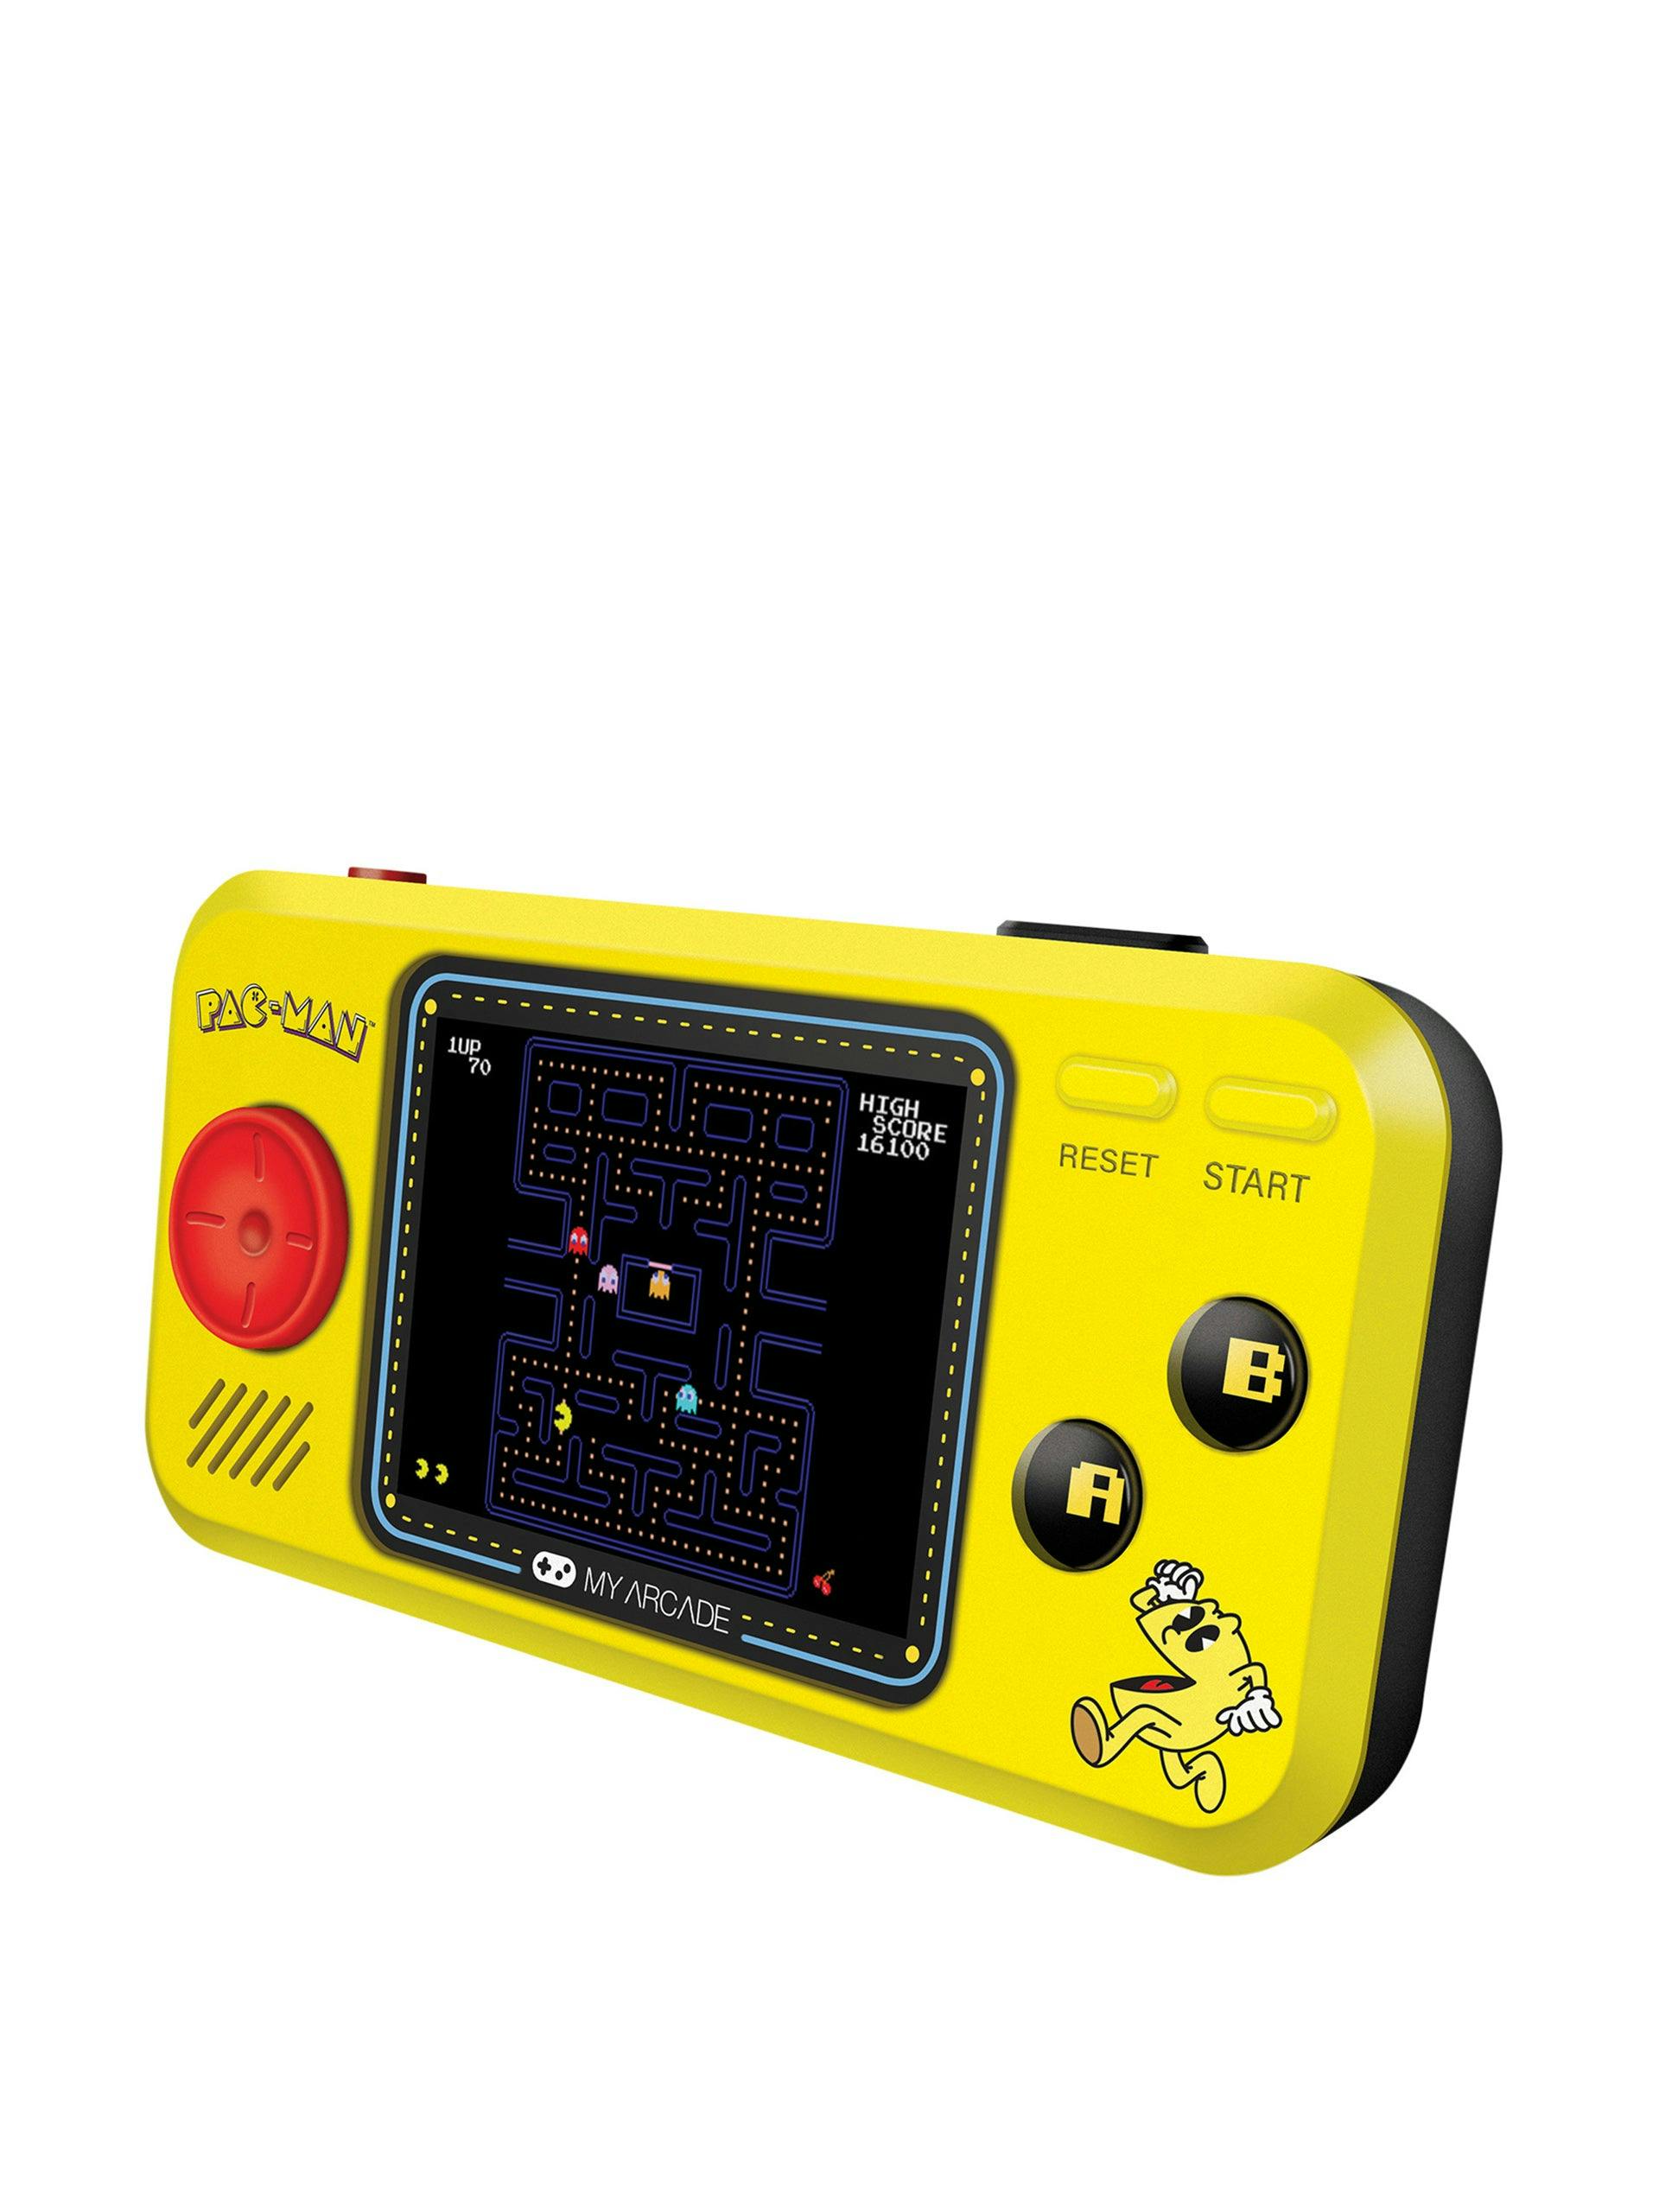 Pac Man pocket console